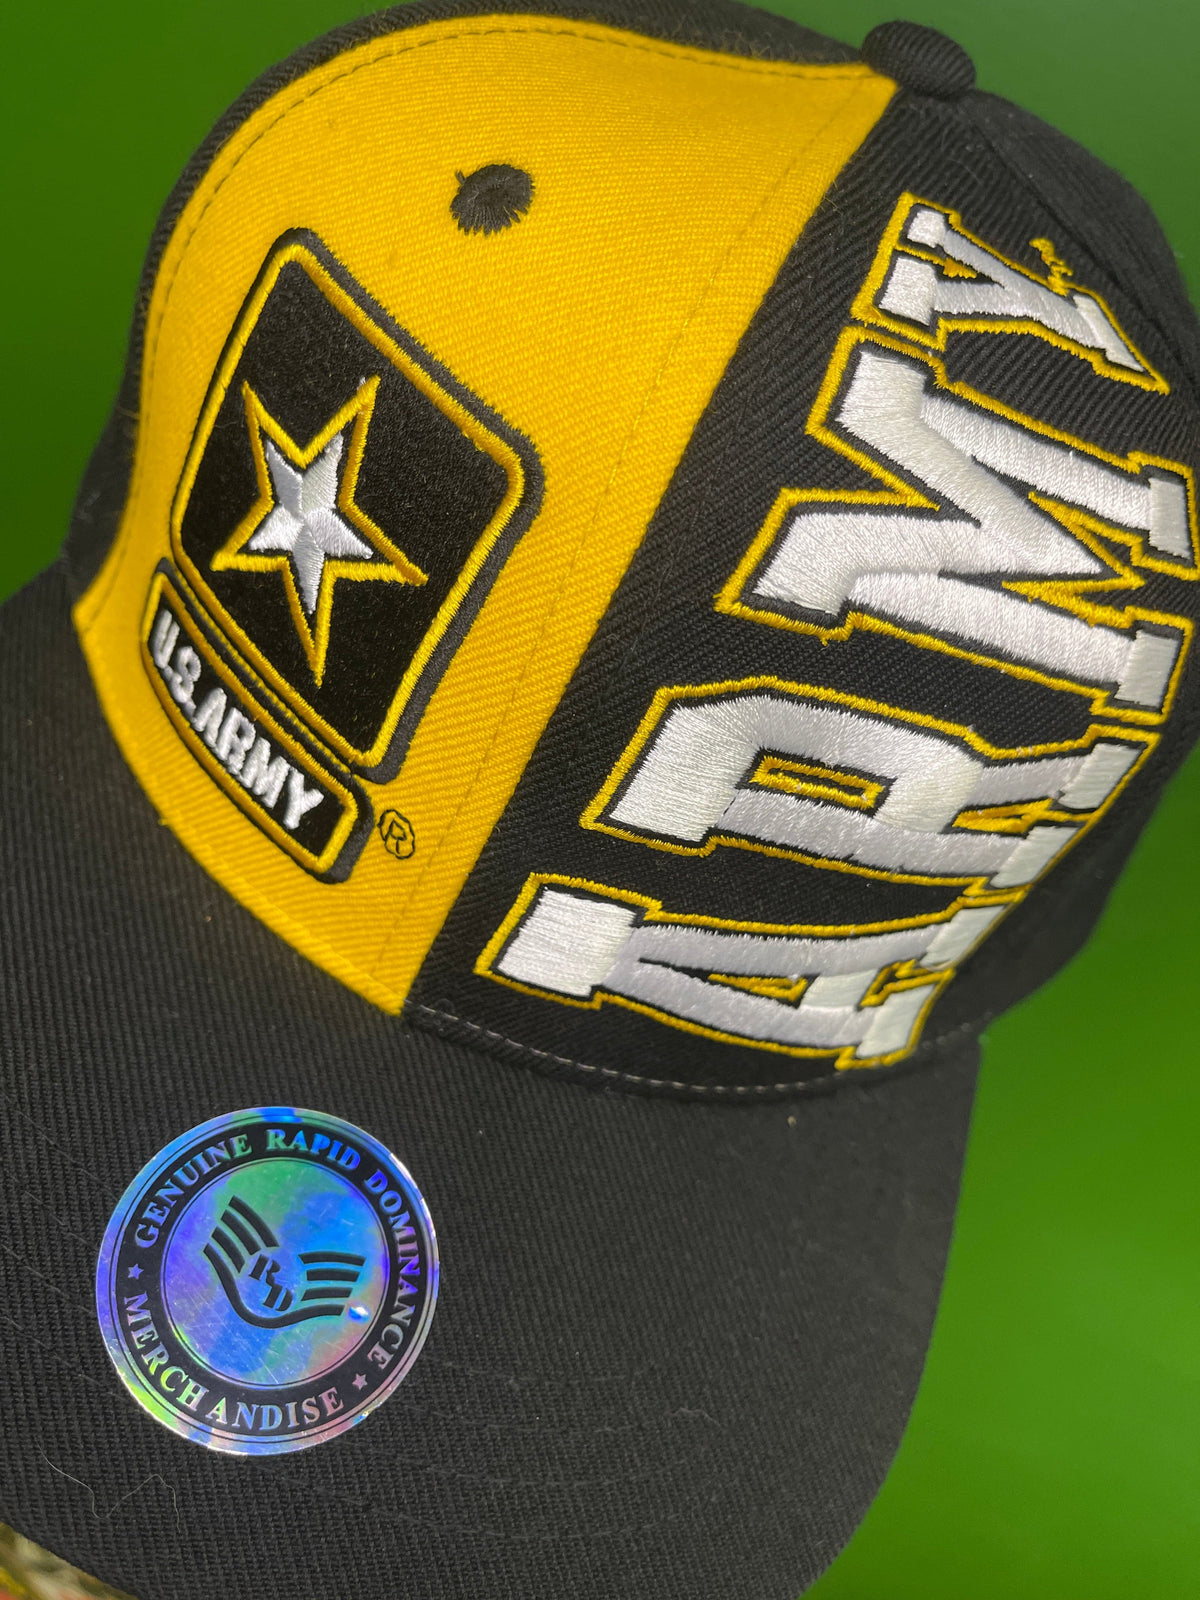 US Army Baseball Hat/Cap Acrylic Snapback OSFM NWT